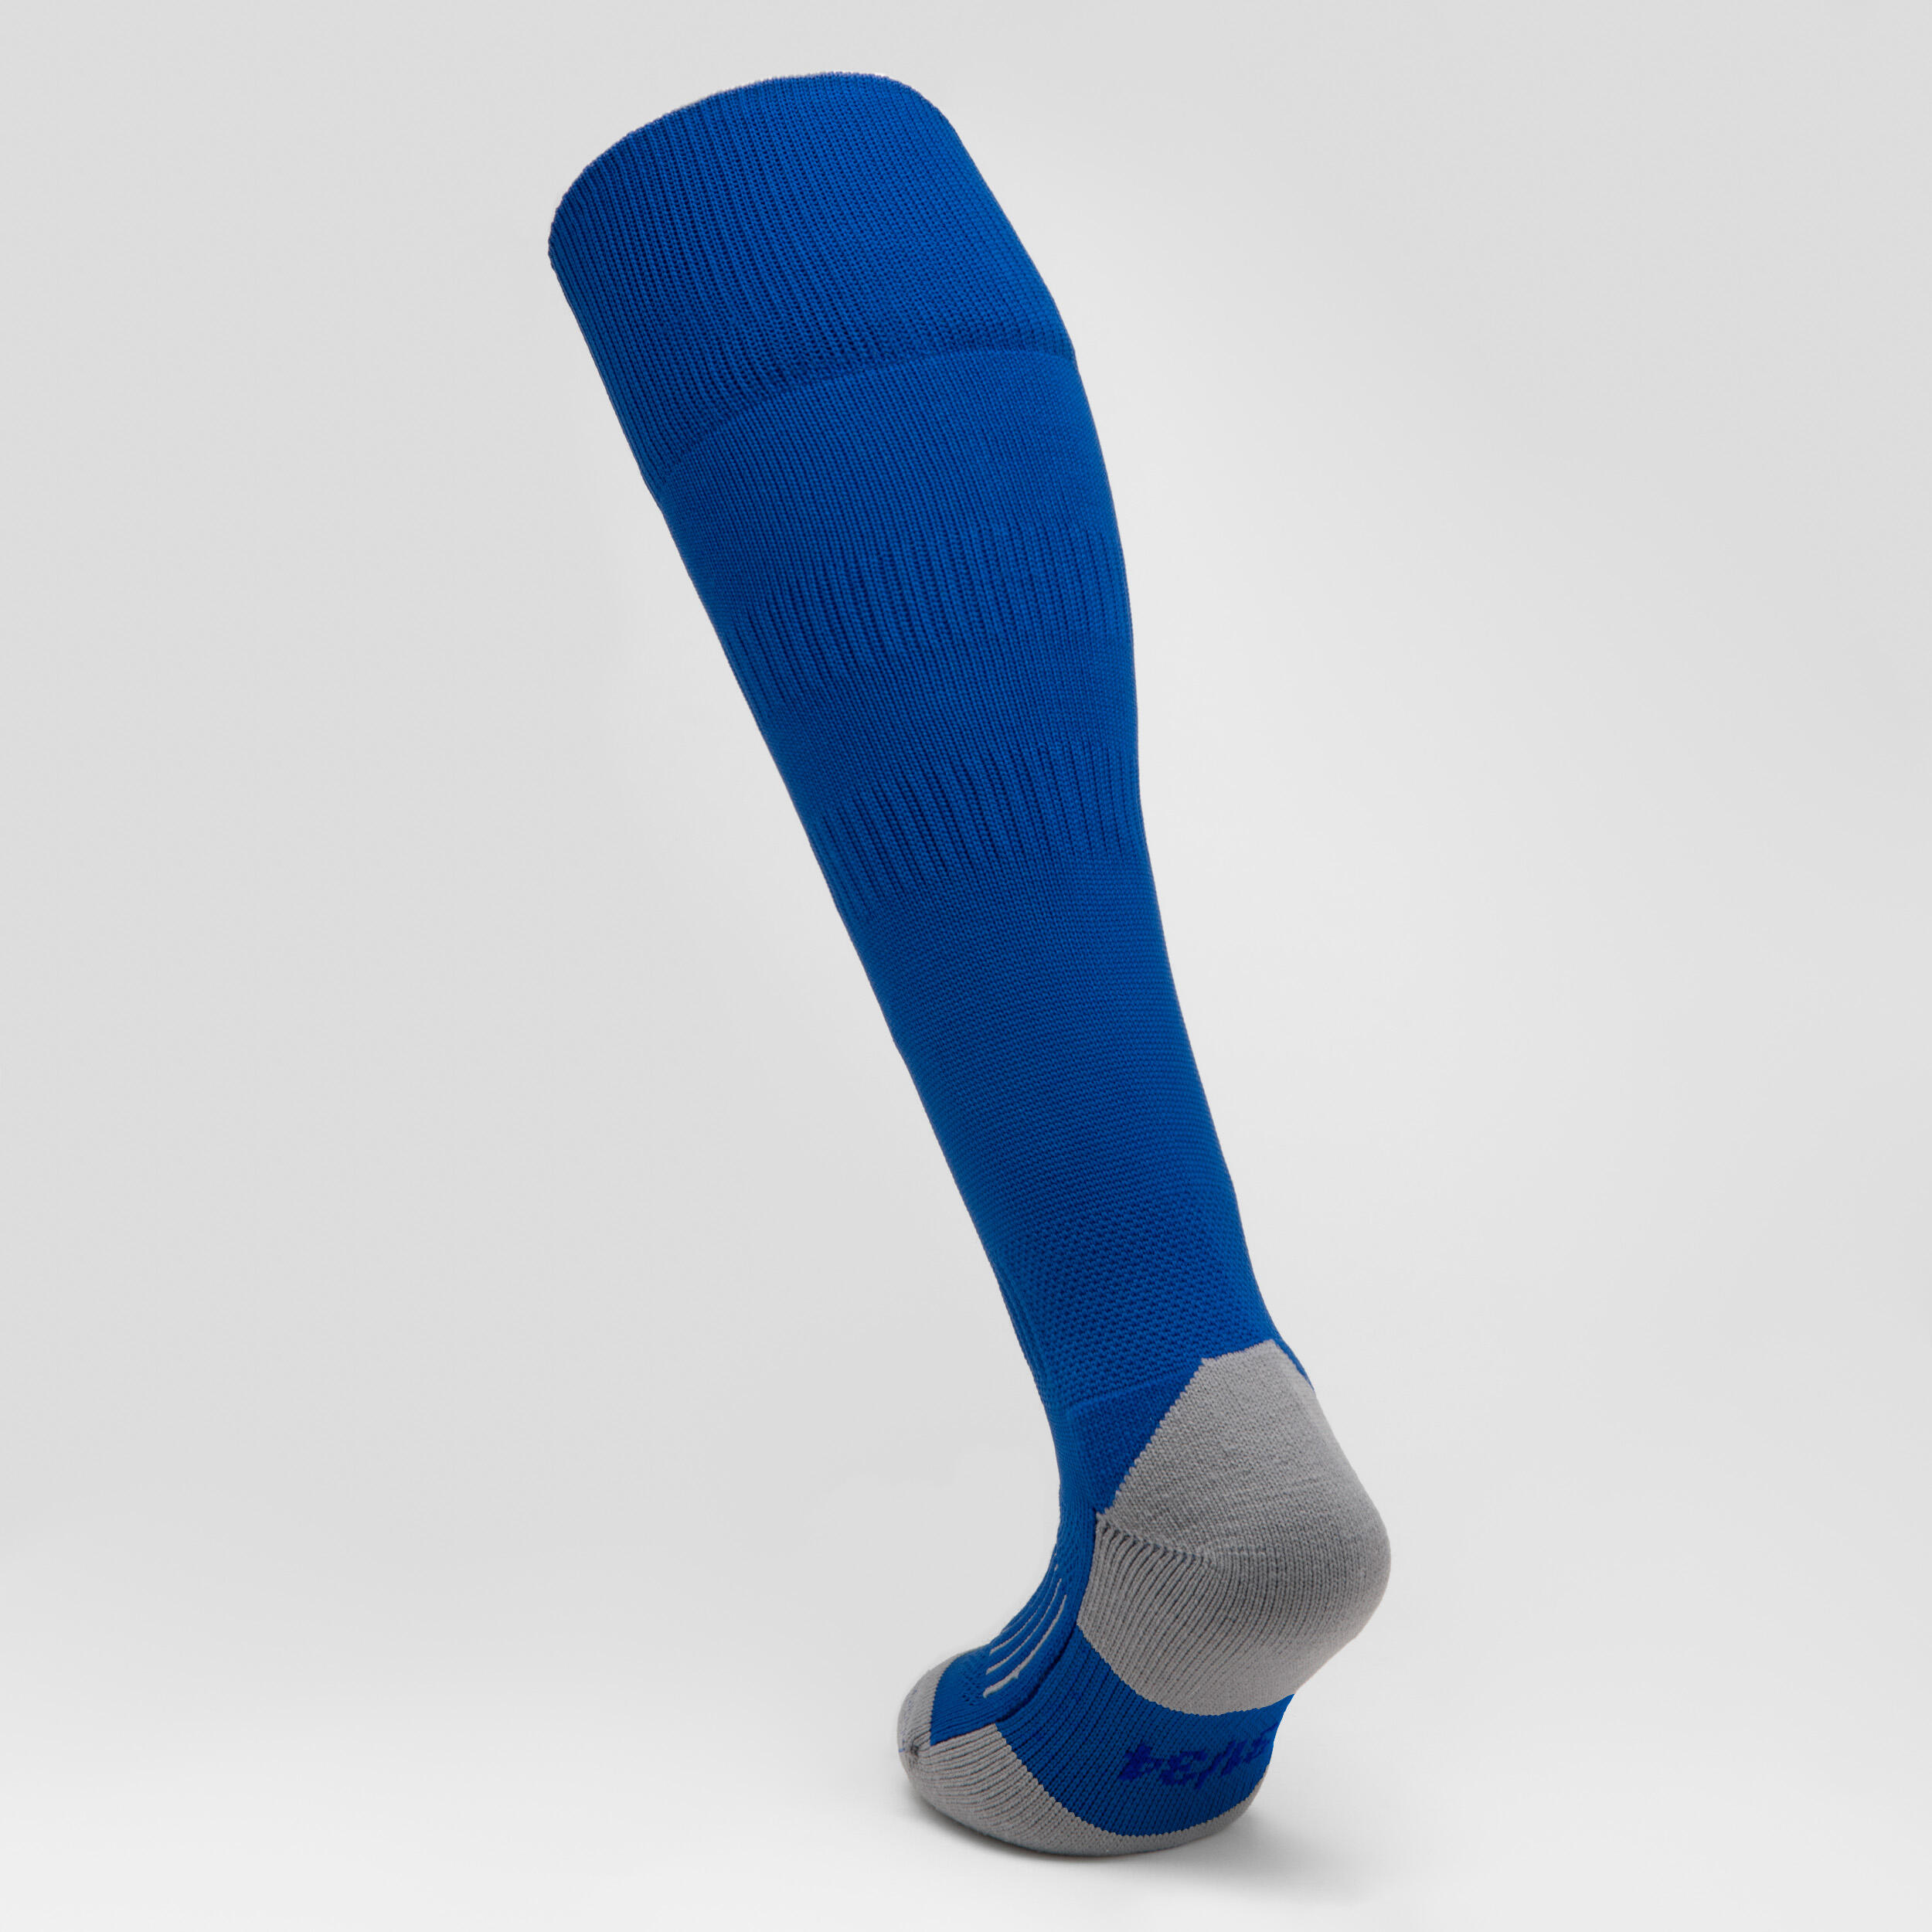 Kids' Knee-Length Rugby Socks R500 - Indigo Blue 2/5